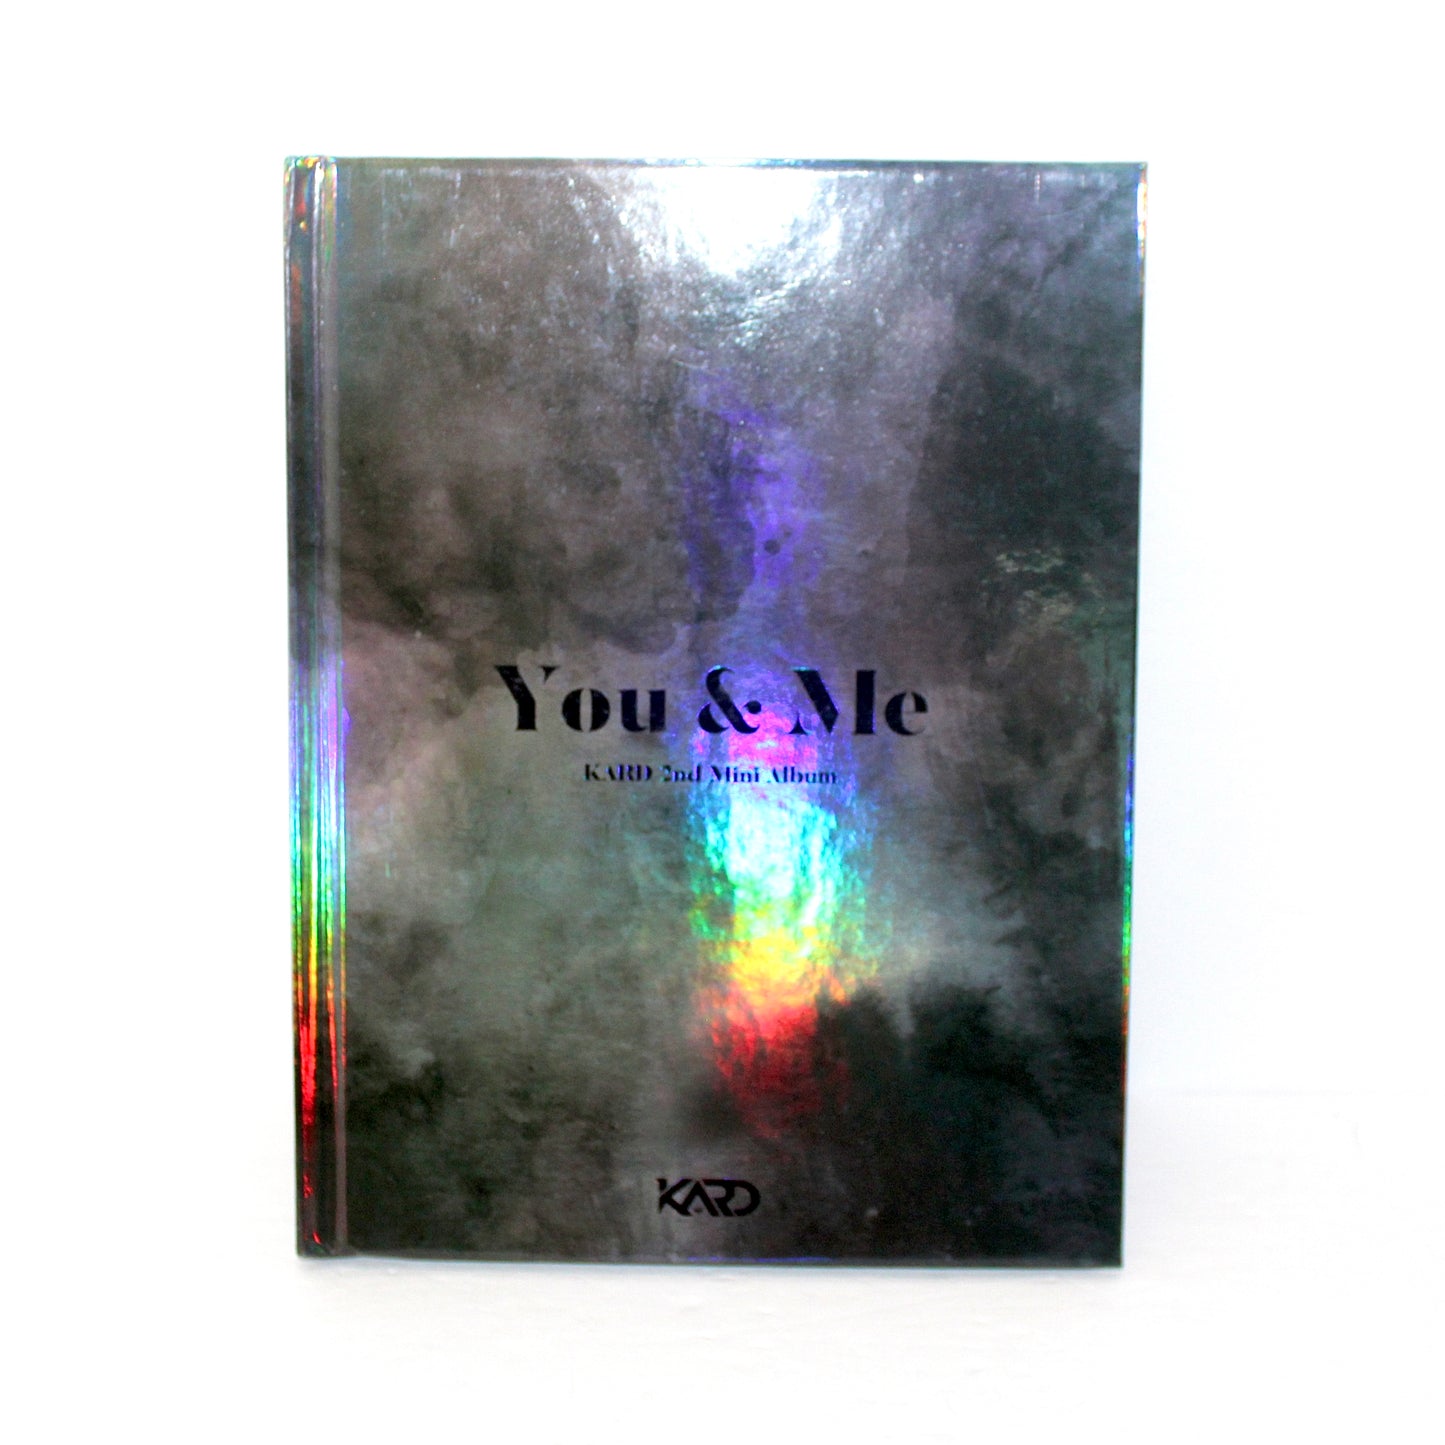 KARD 2nd Mini Album: You & Me